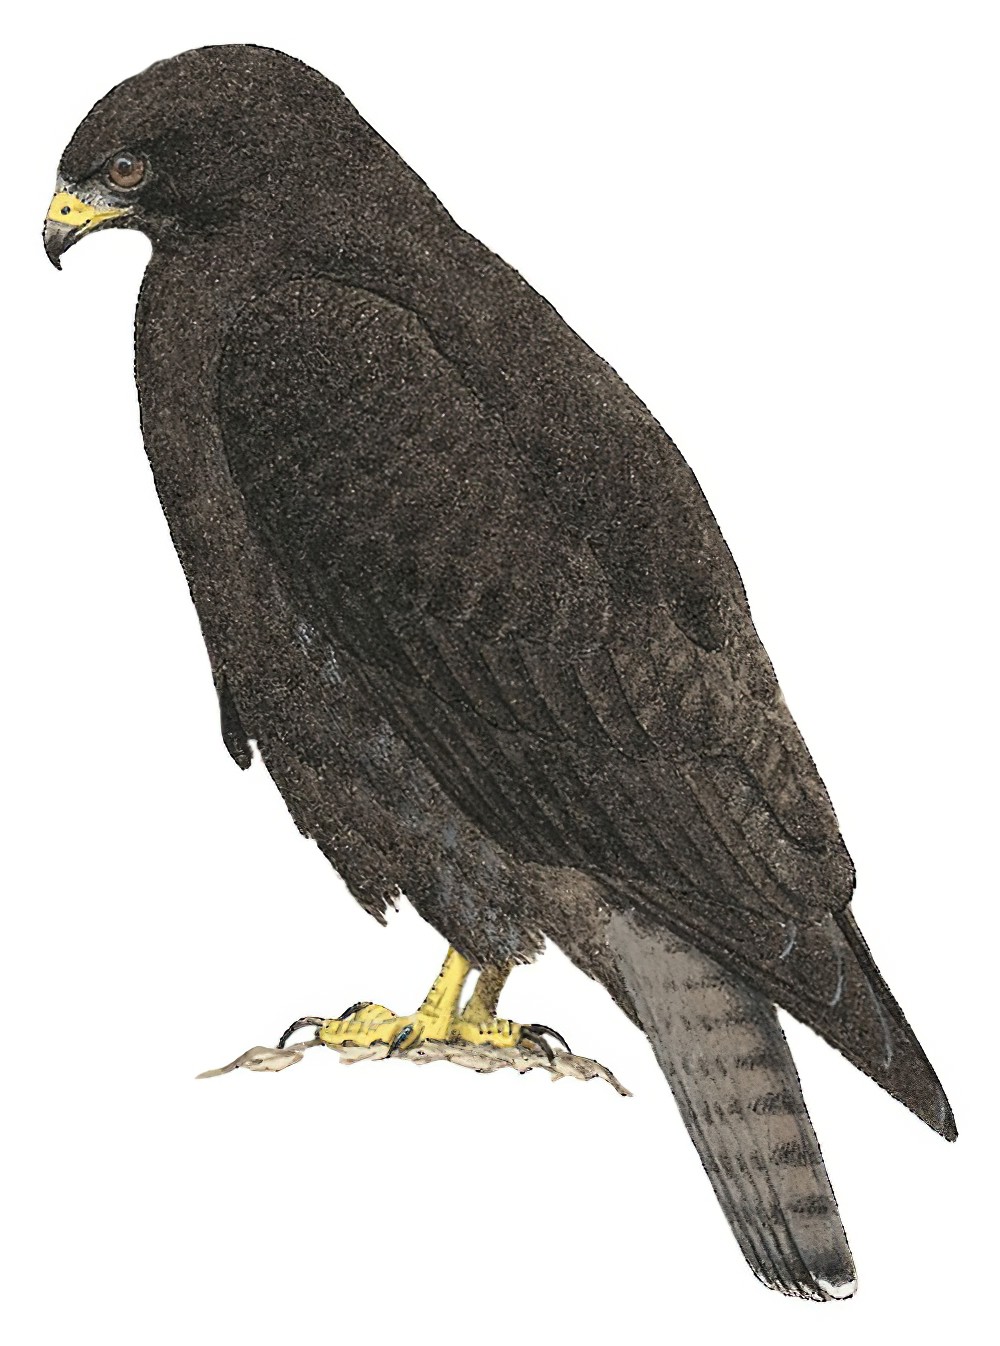 Rufous-tailed Hawk / Buteo ventralis